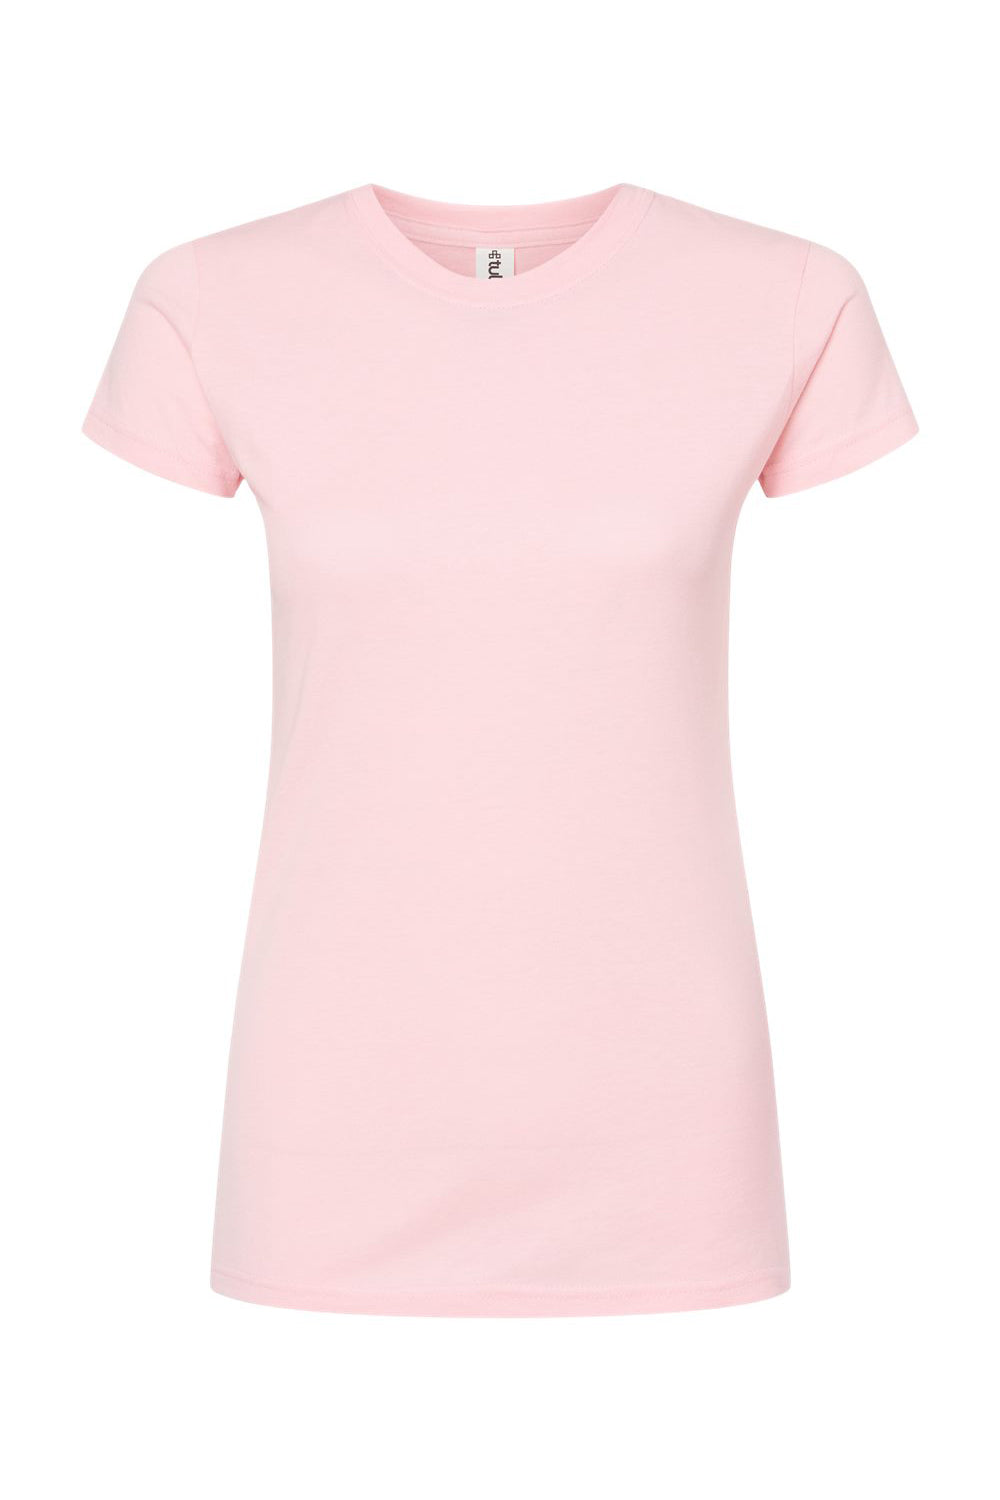 Tultex 213 Womens Fine Jersey Slim Fit Short Sleeve Crewneck T-Shirt Pink Flat Front